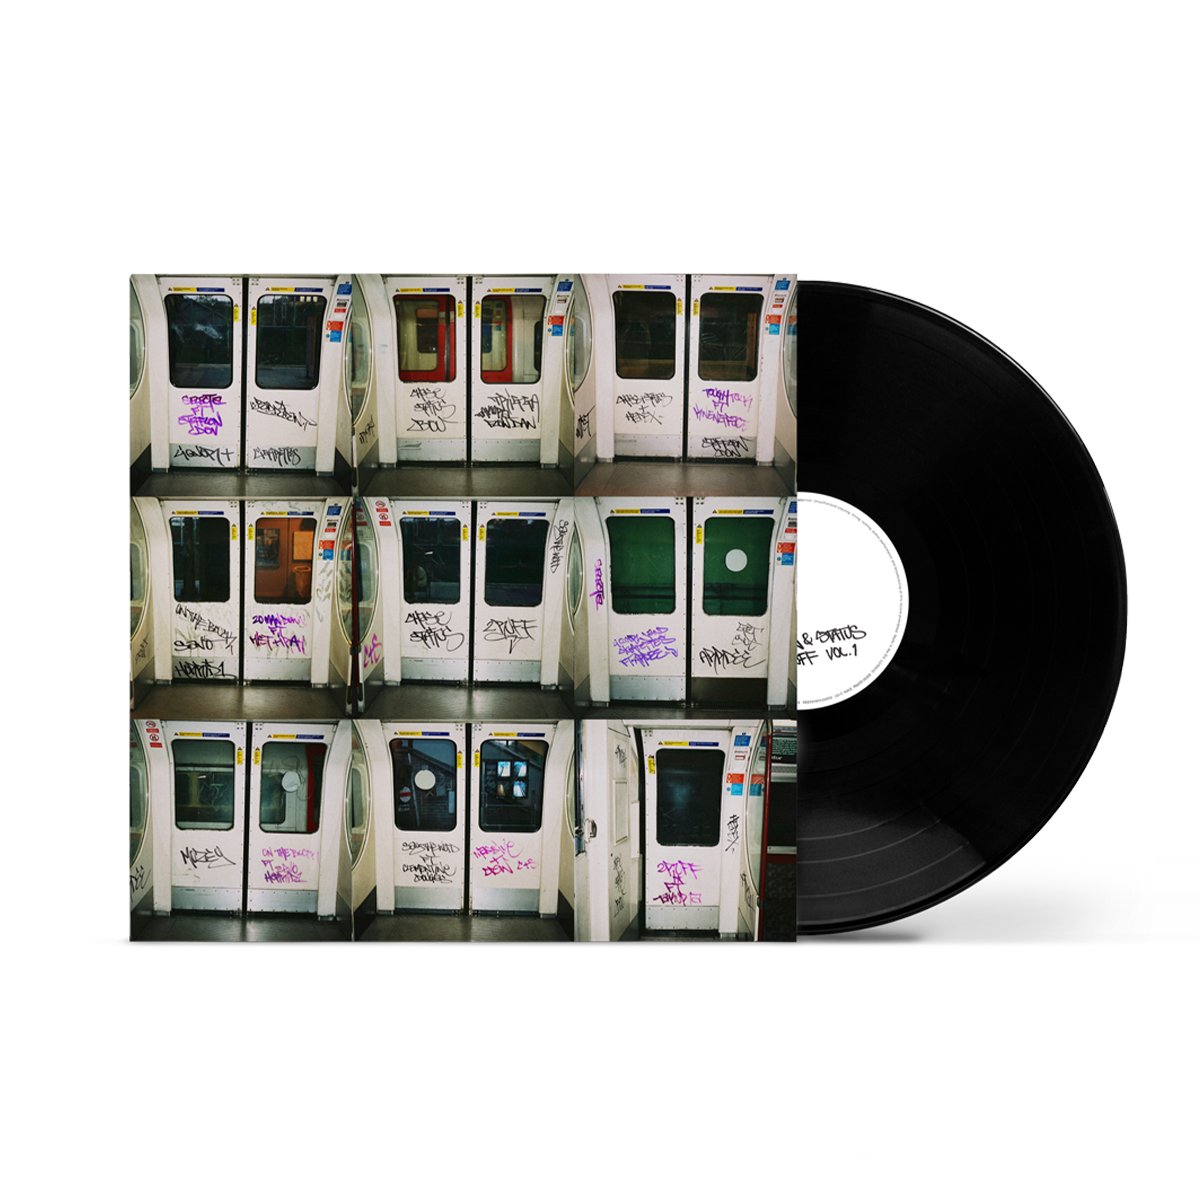 2 Ruff, Vol.1: Vinyl LP + USB